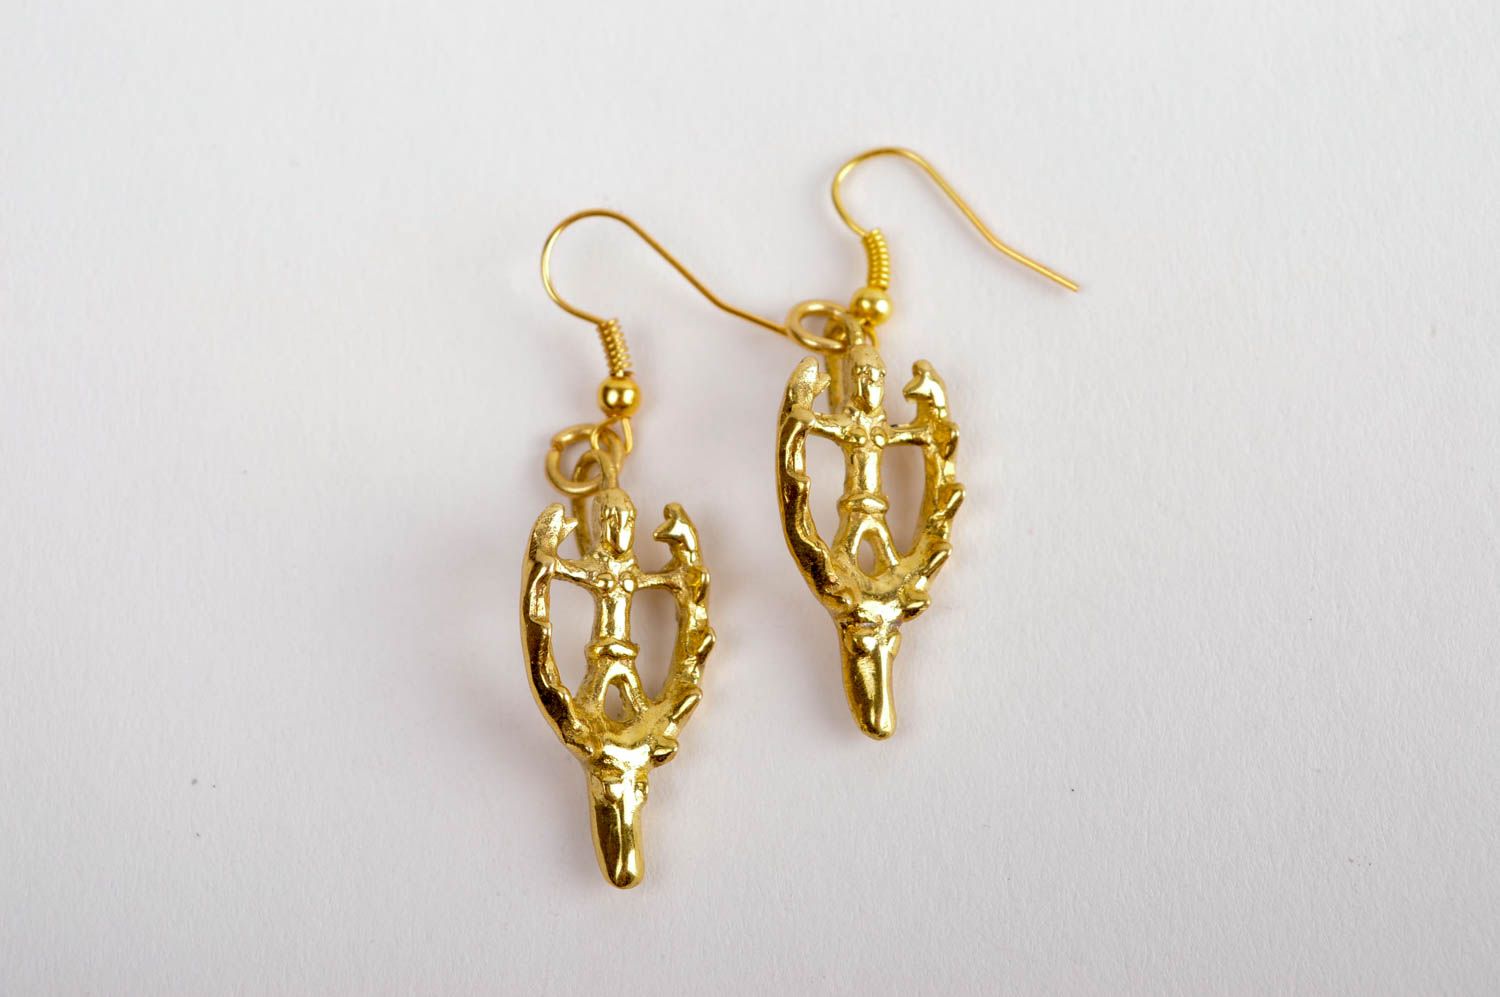 Long earrings fashion accessories designer jewelry handmade earrings gift ideas photo 3